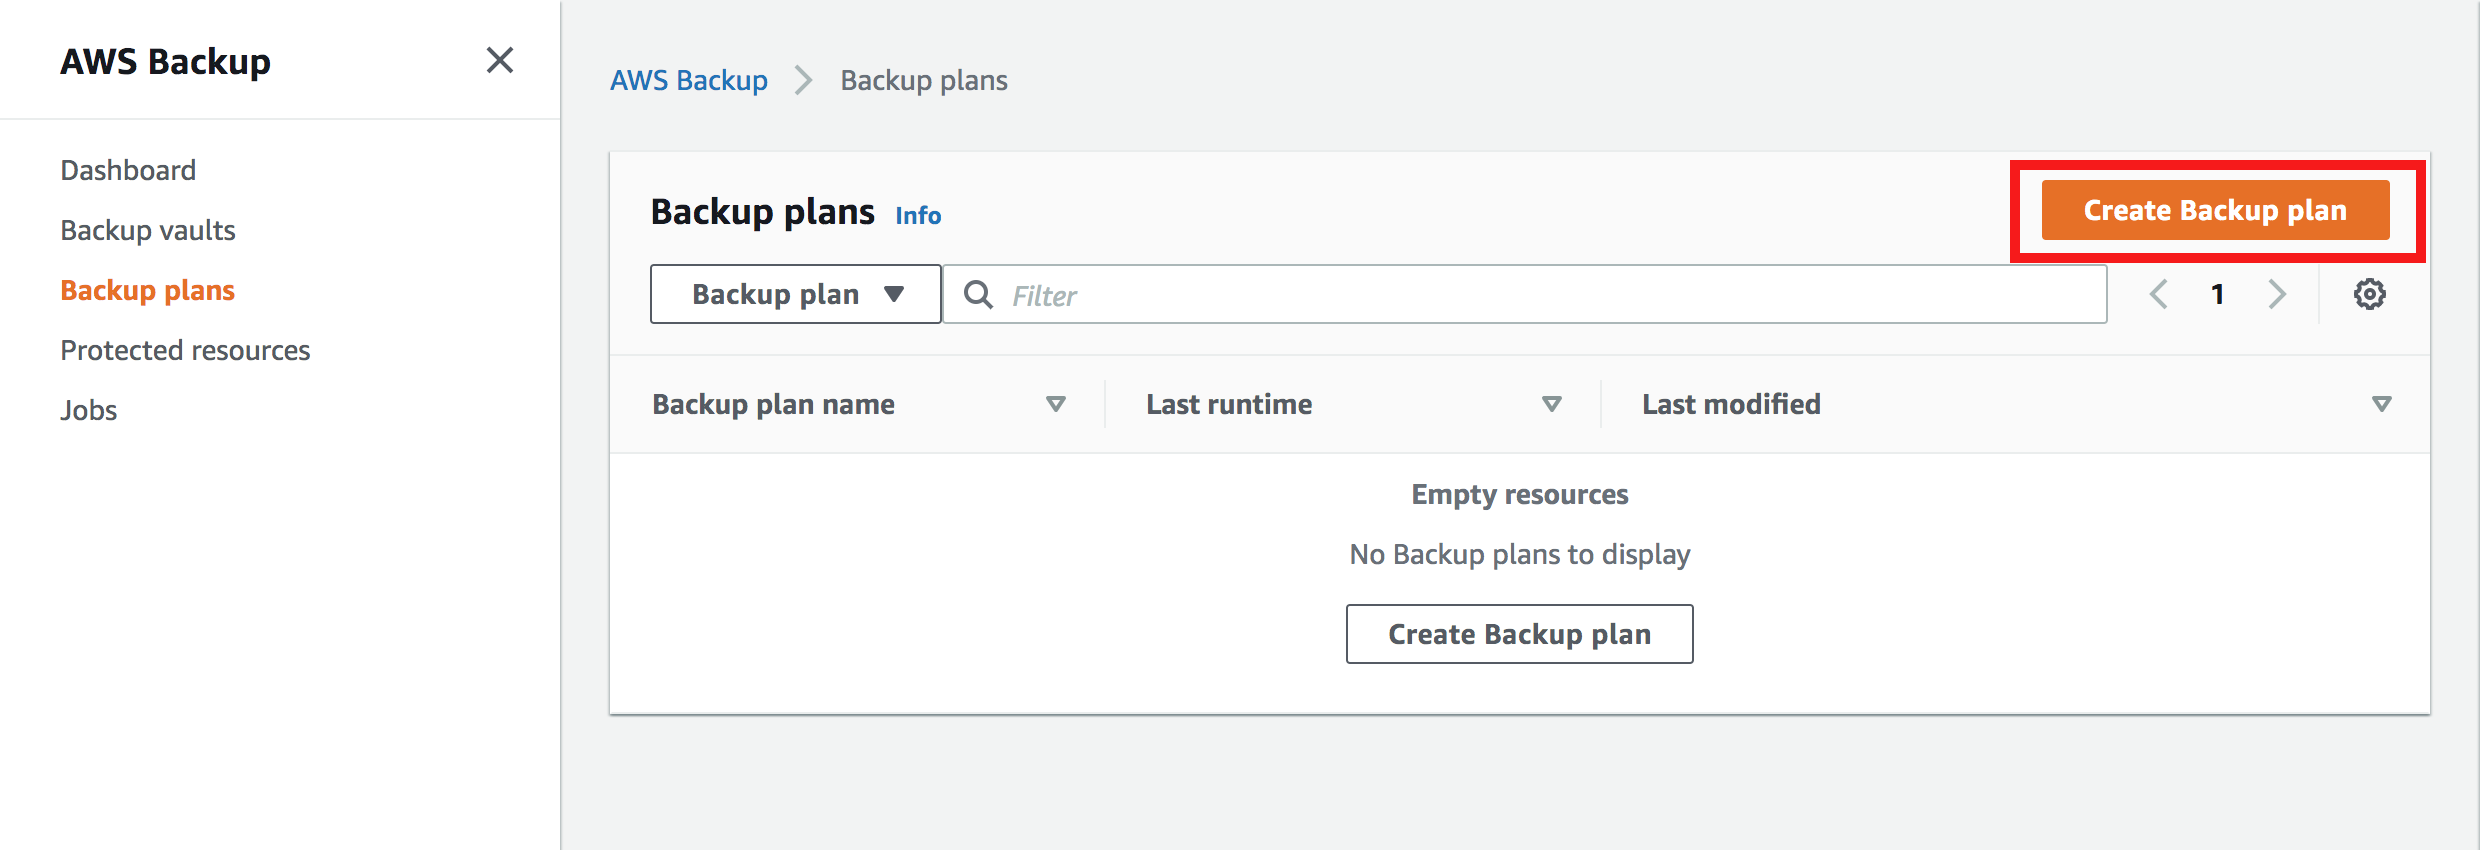 create-backup-plan-1